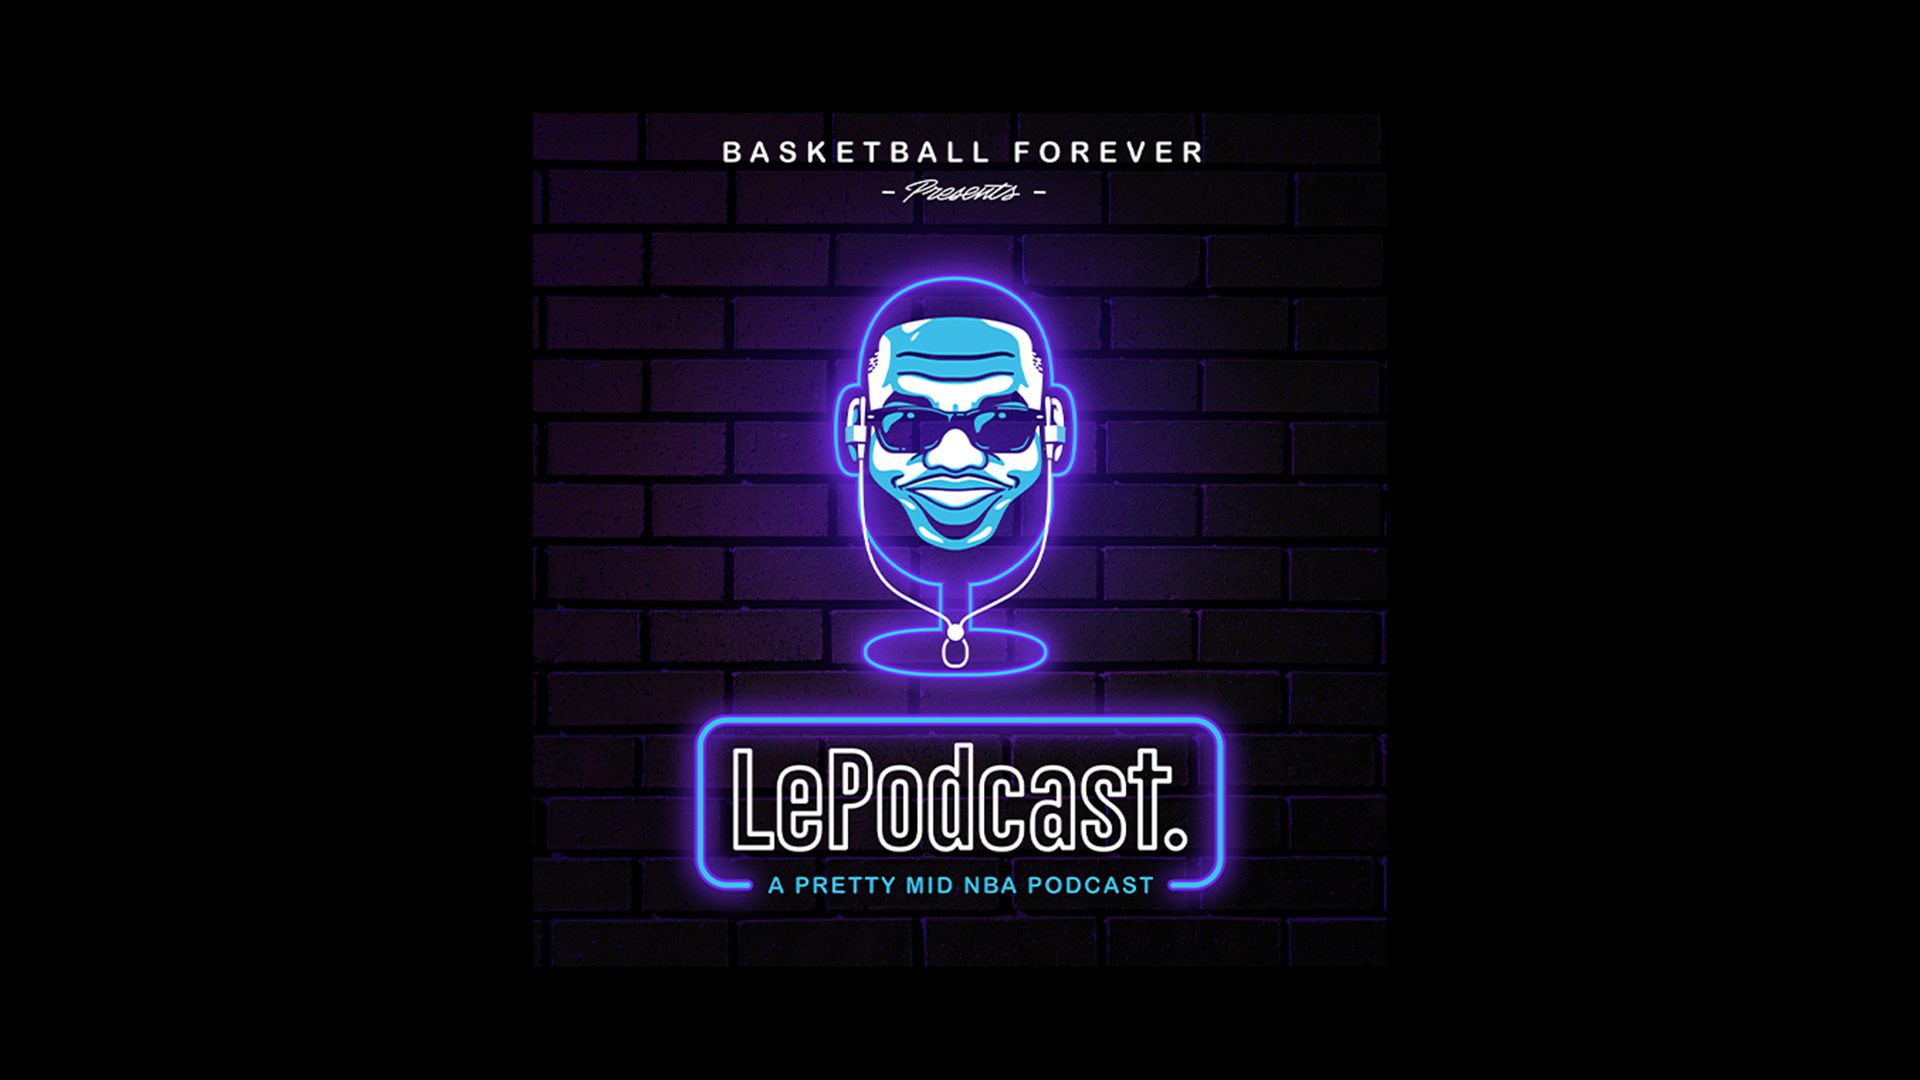 LePodcast Episode 44: James Harden “Historic” Playoff Choker